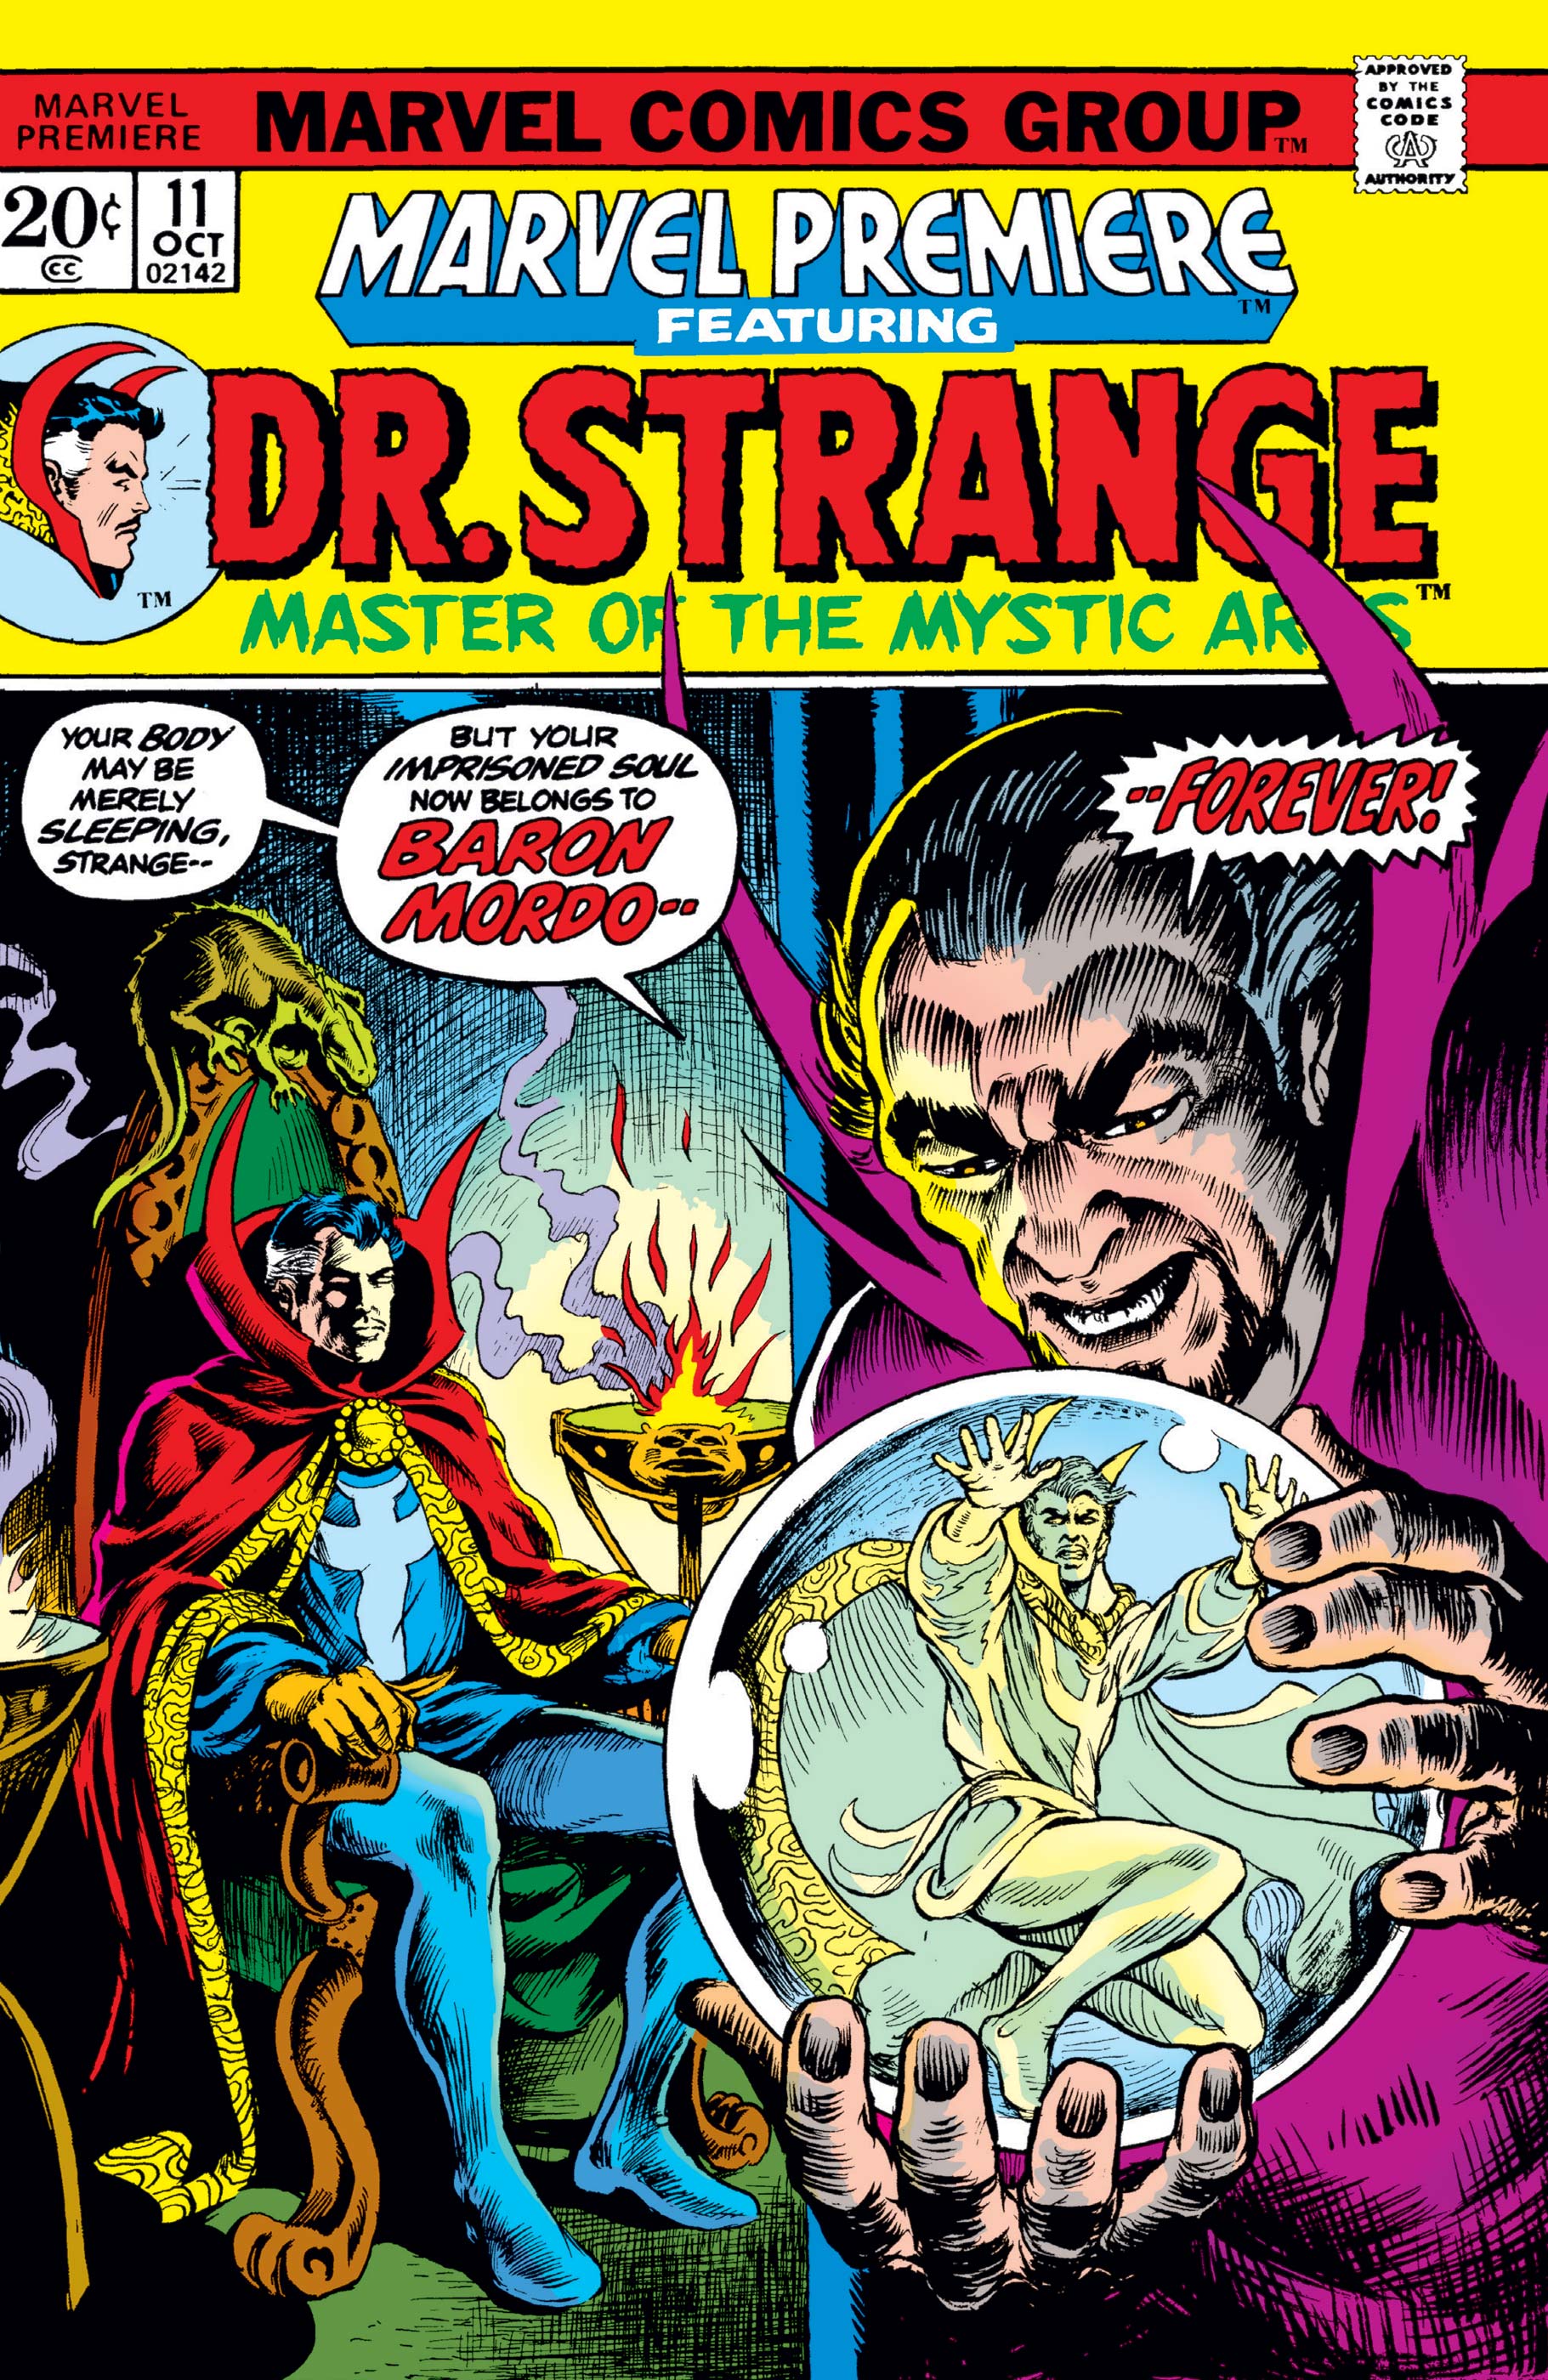 Marvel Super Heroes (1990) #11, Comic Issues